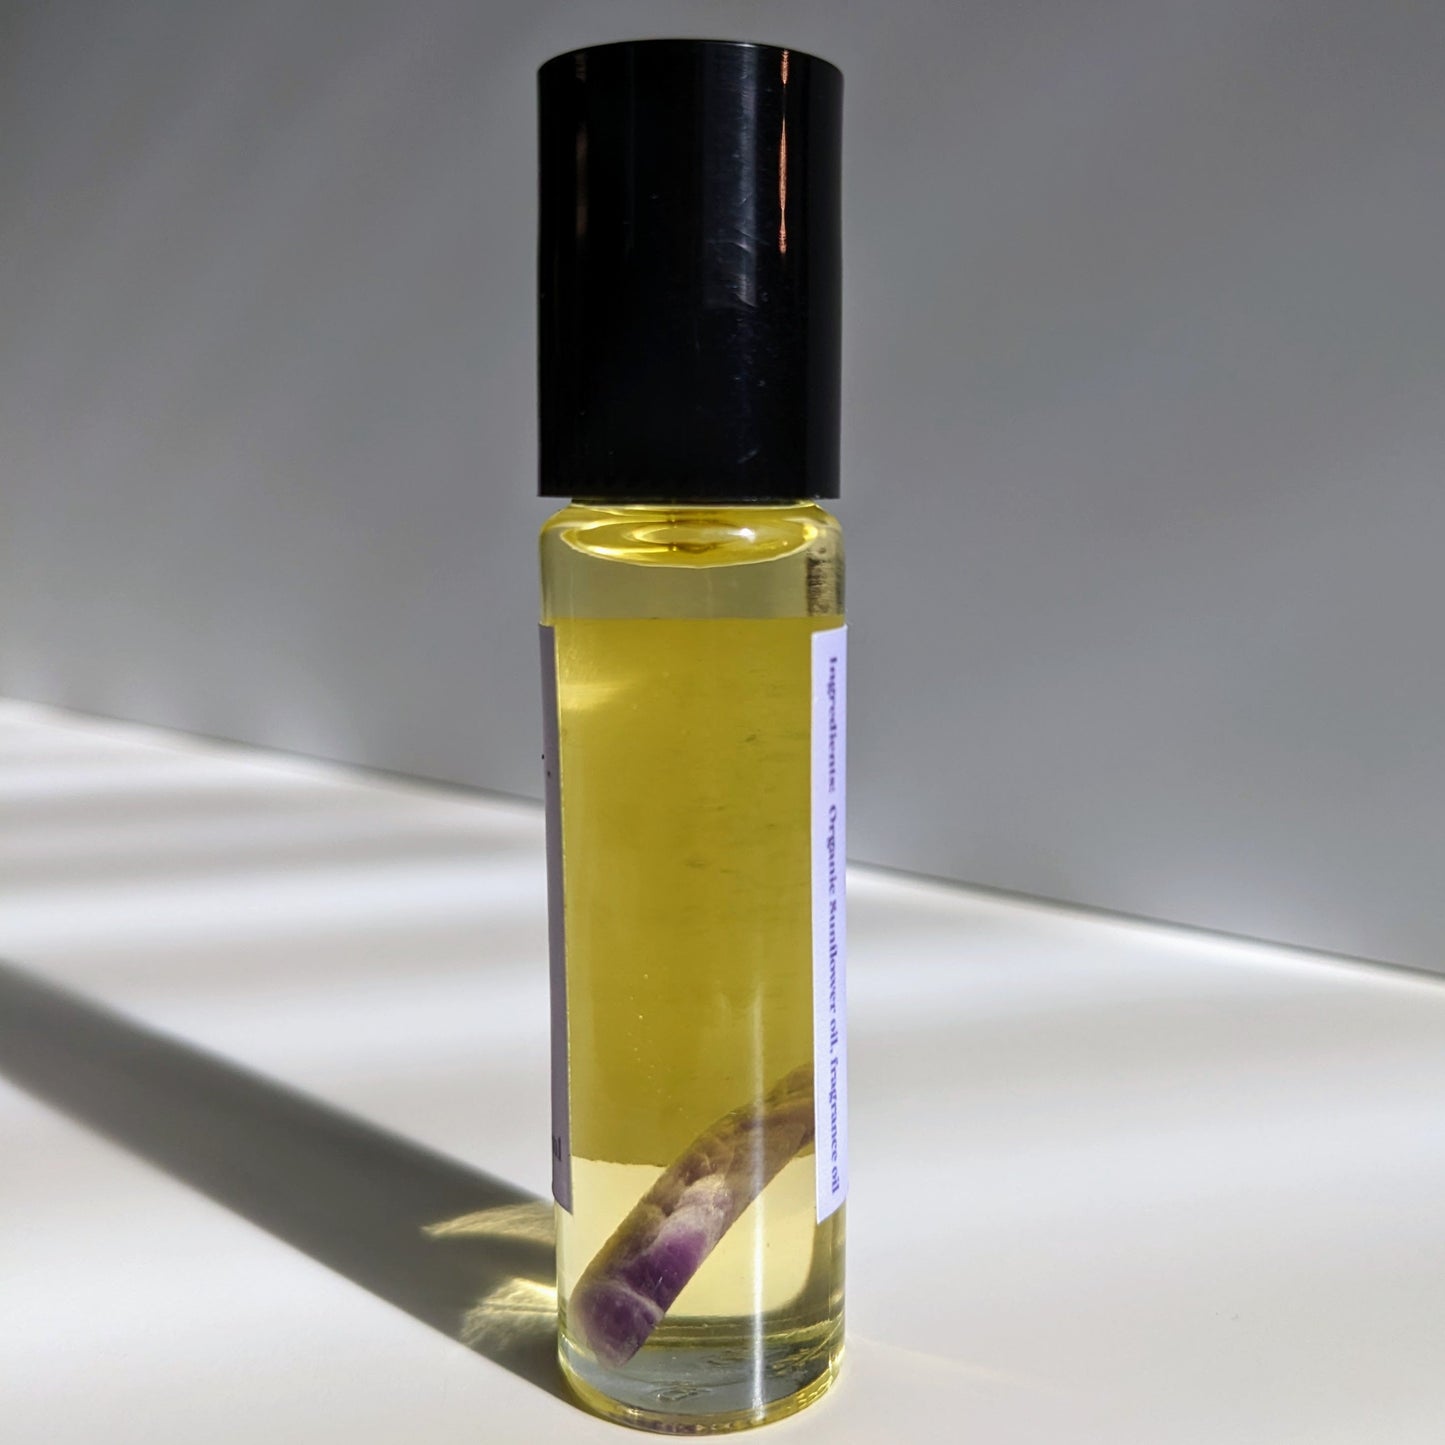 Amethyst Perfume Oil